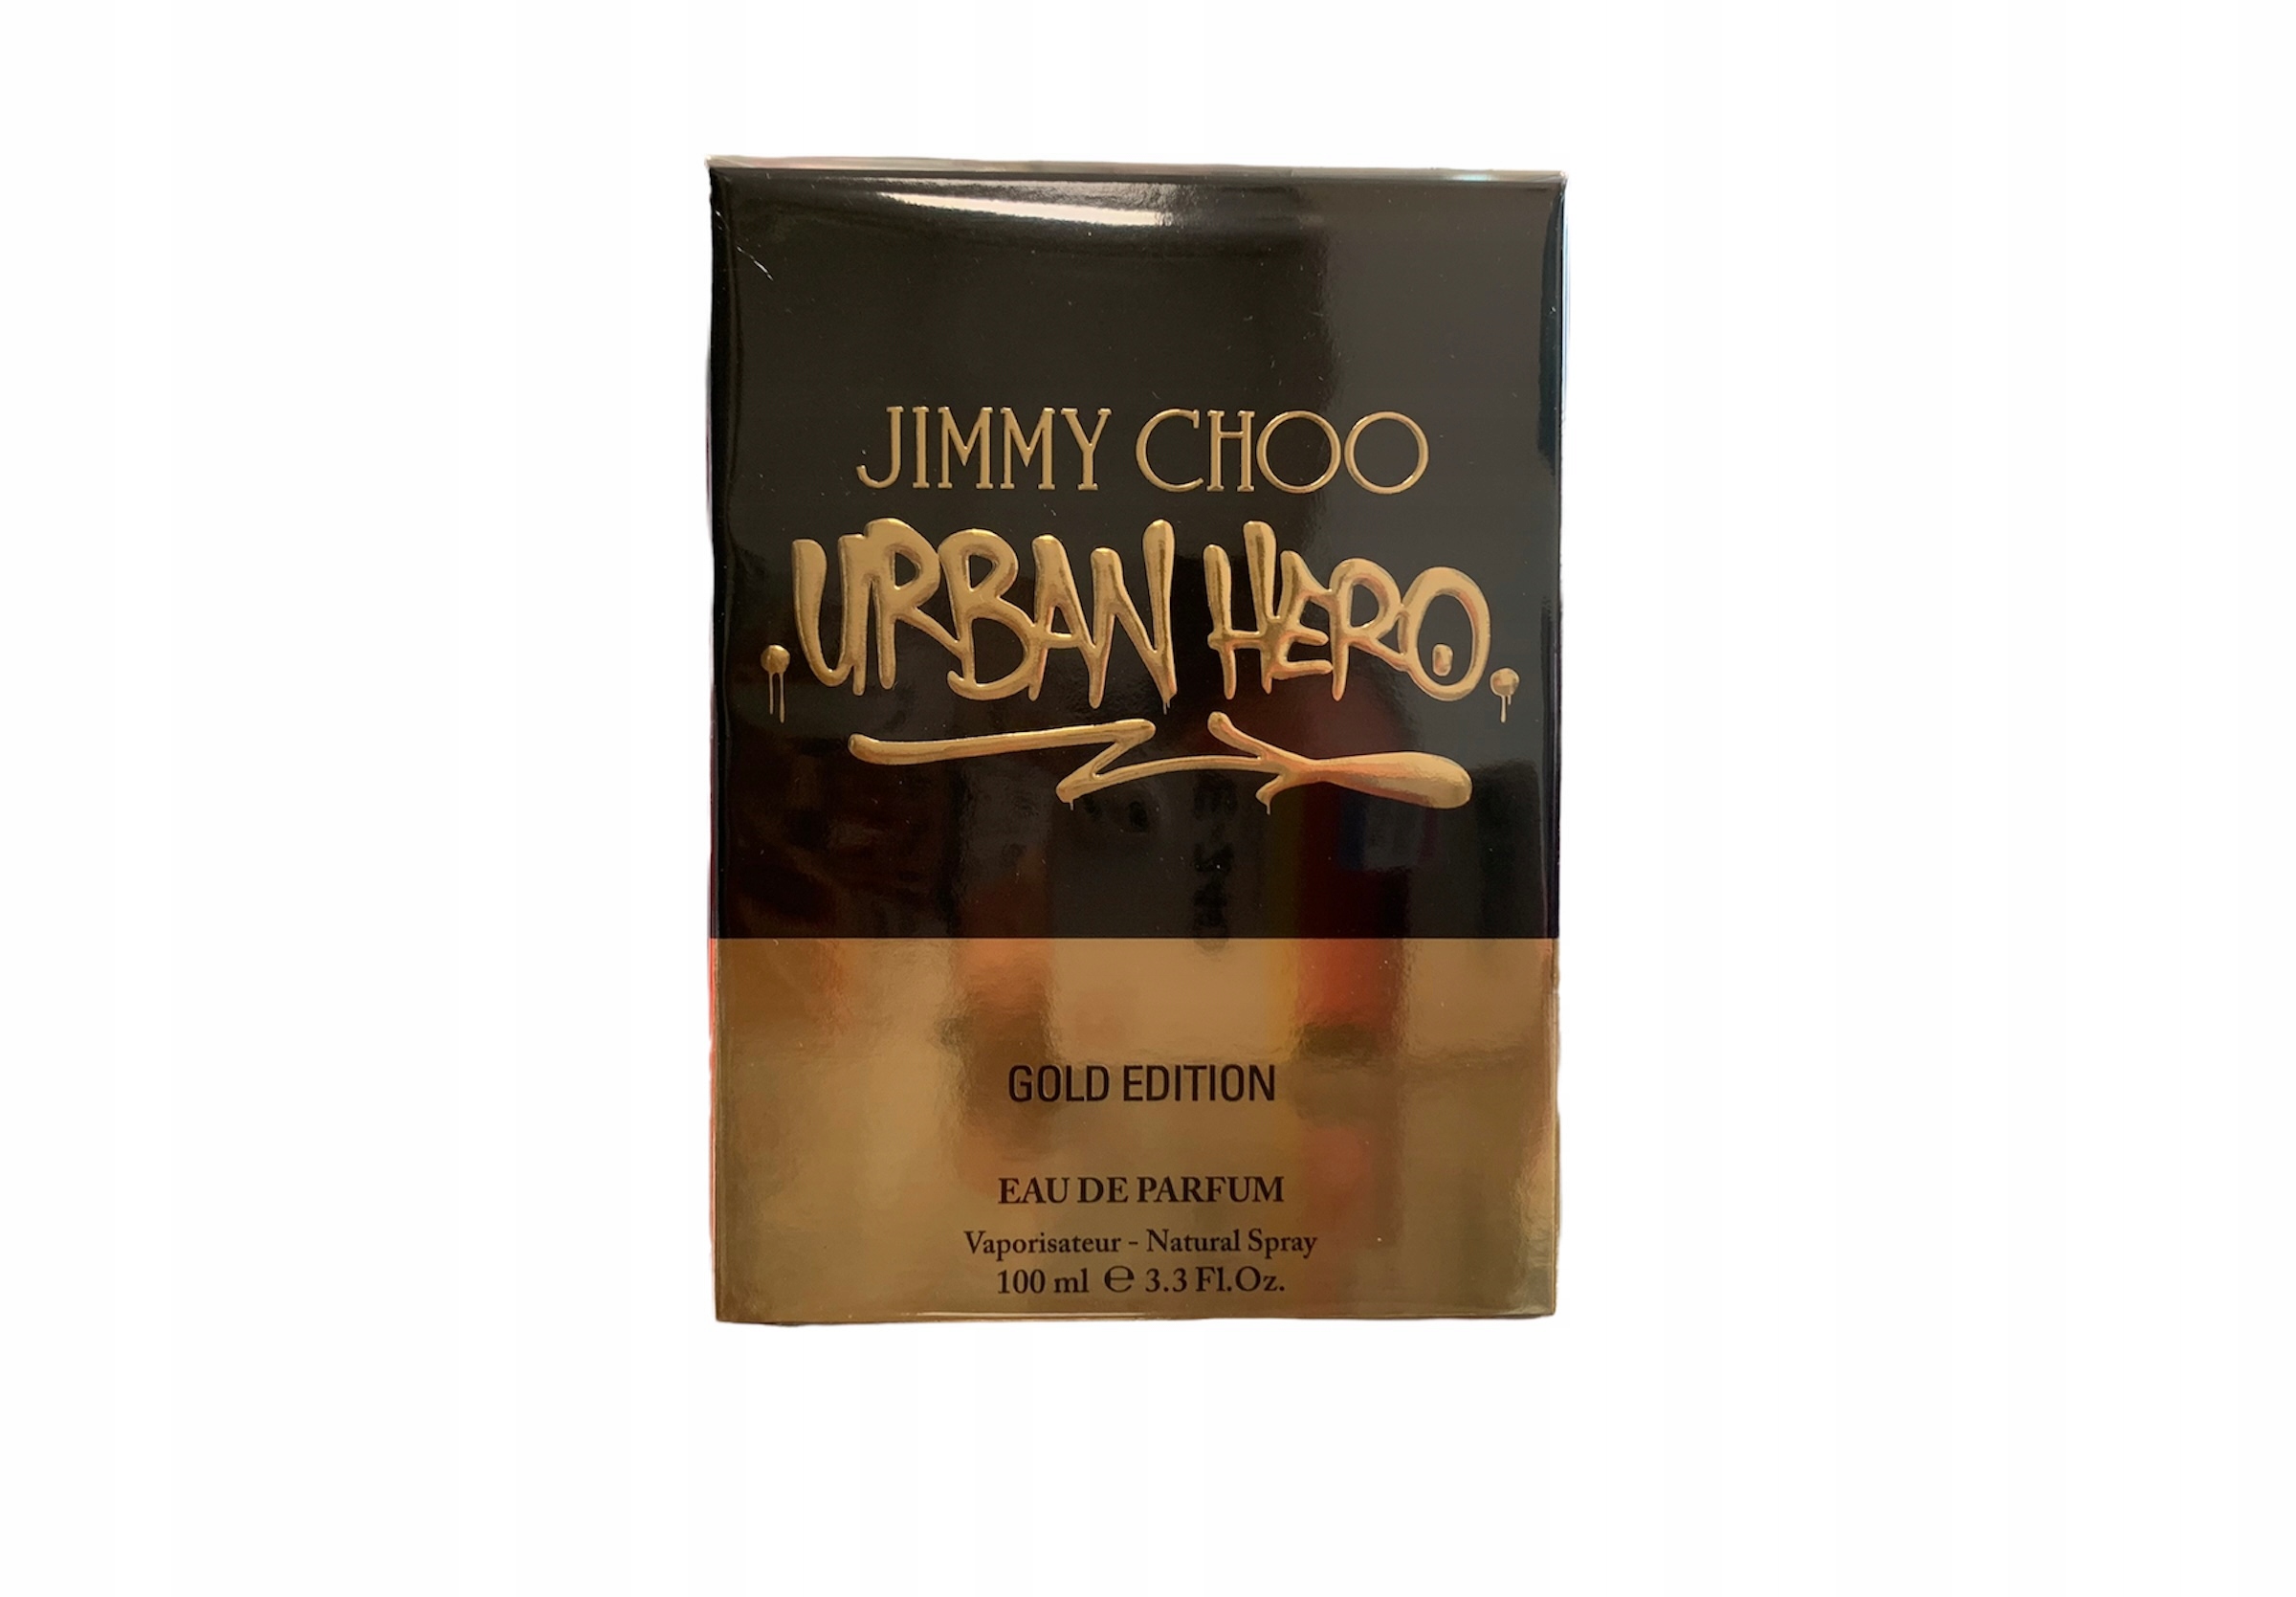 JIMMY CHOO URBAN HERO GOLD EDITION 100 ml